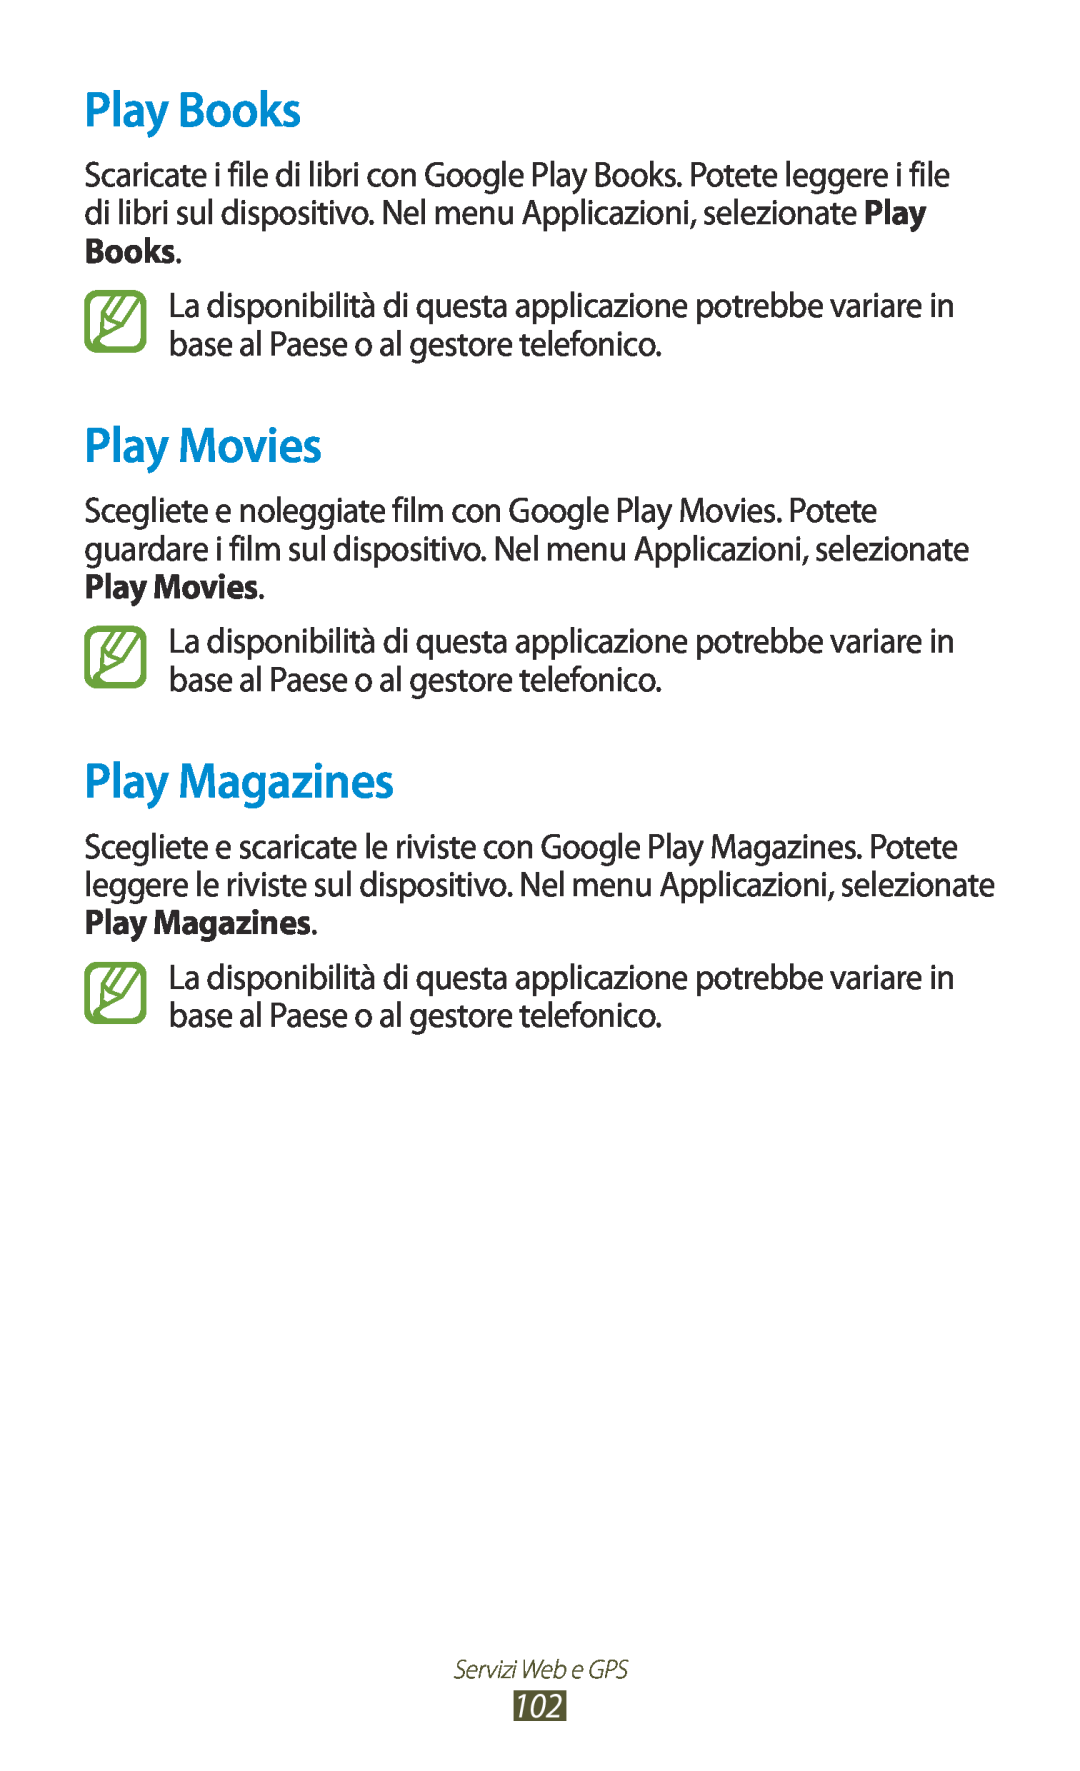 Samsung GT-S7560UWAOMN, GT-S7560UWAWIN, GT-S7560ZKAXEO manual Play Books, Play Movies, Play Magazines, Servizi Web e GPS 